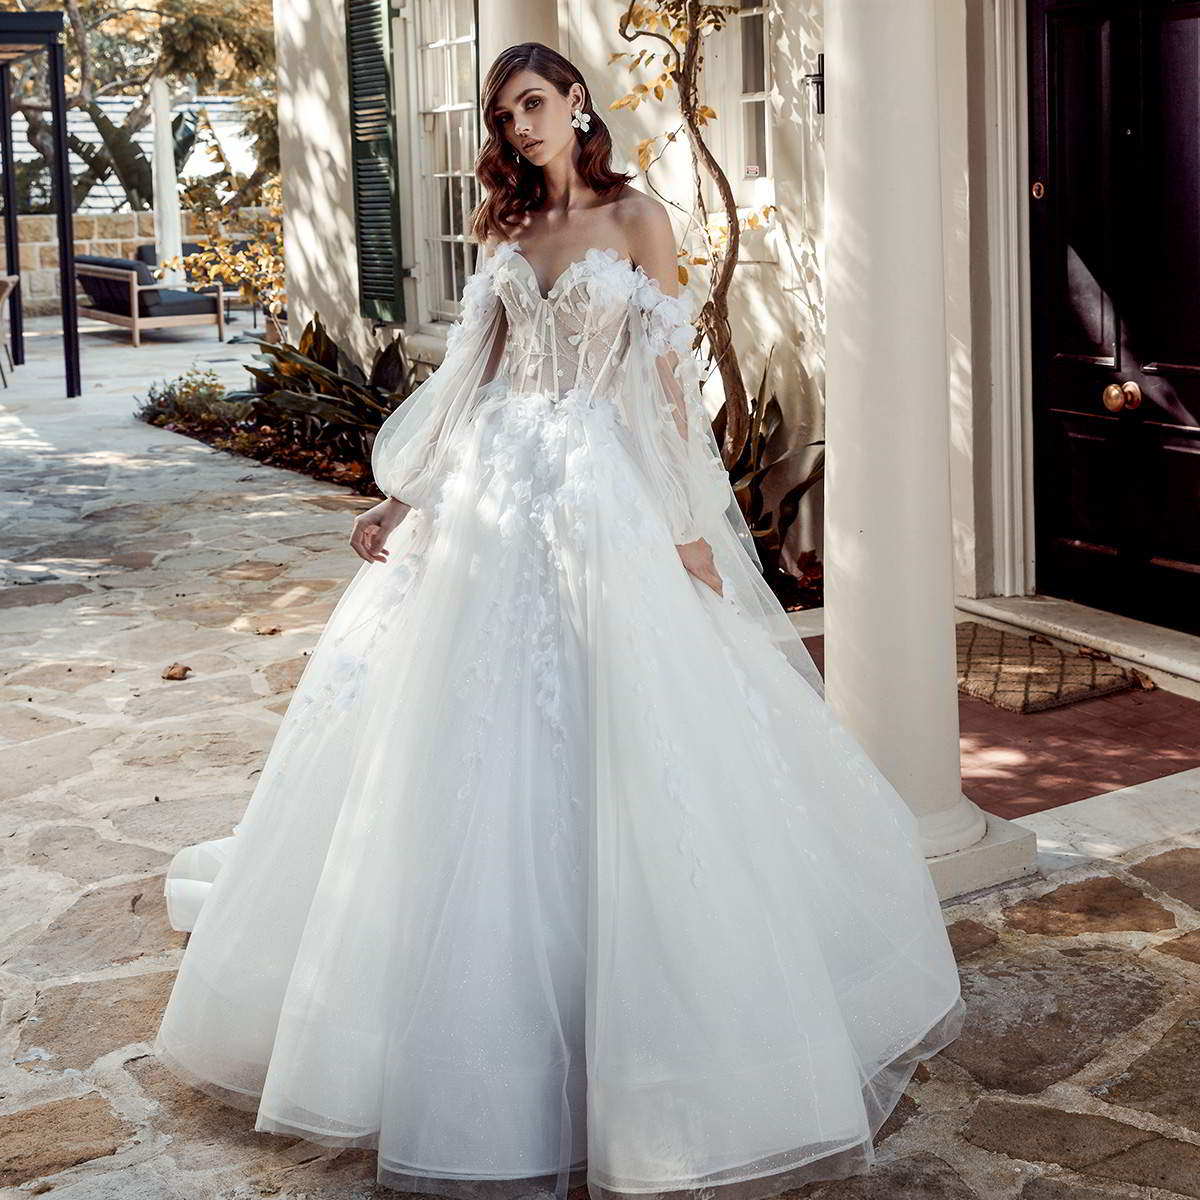 leah da gloria 2020 bridal couture collection featured on wedding inspirasi thumbnail